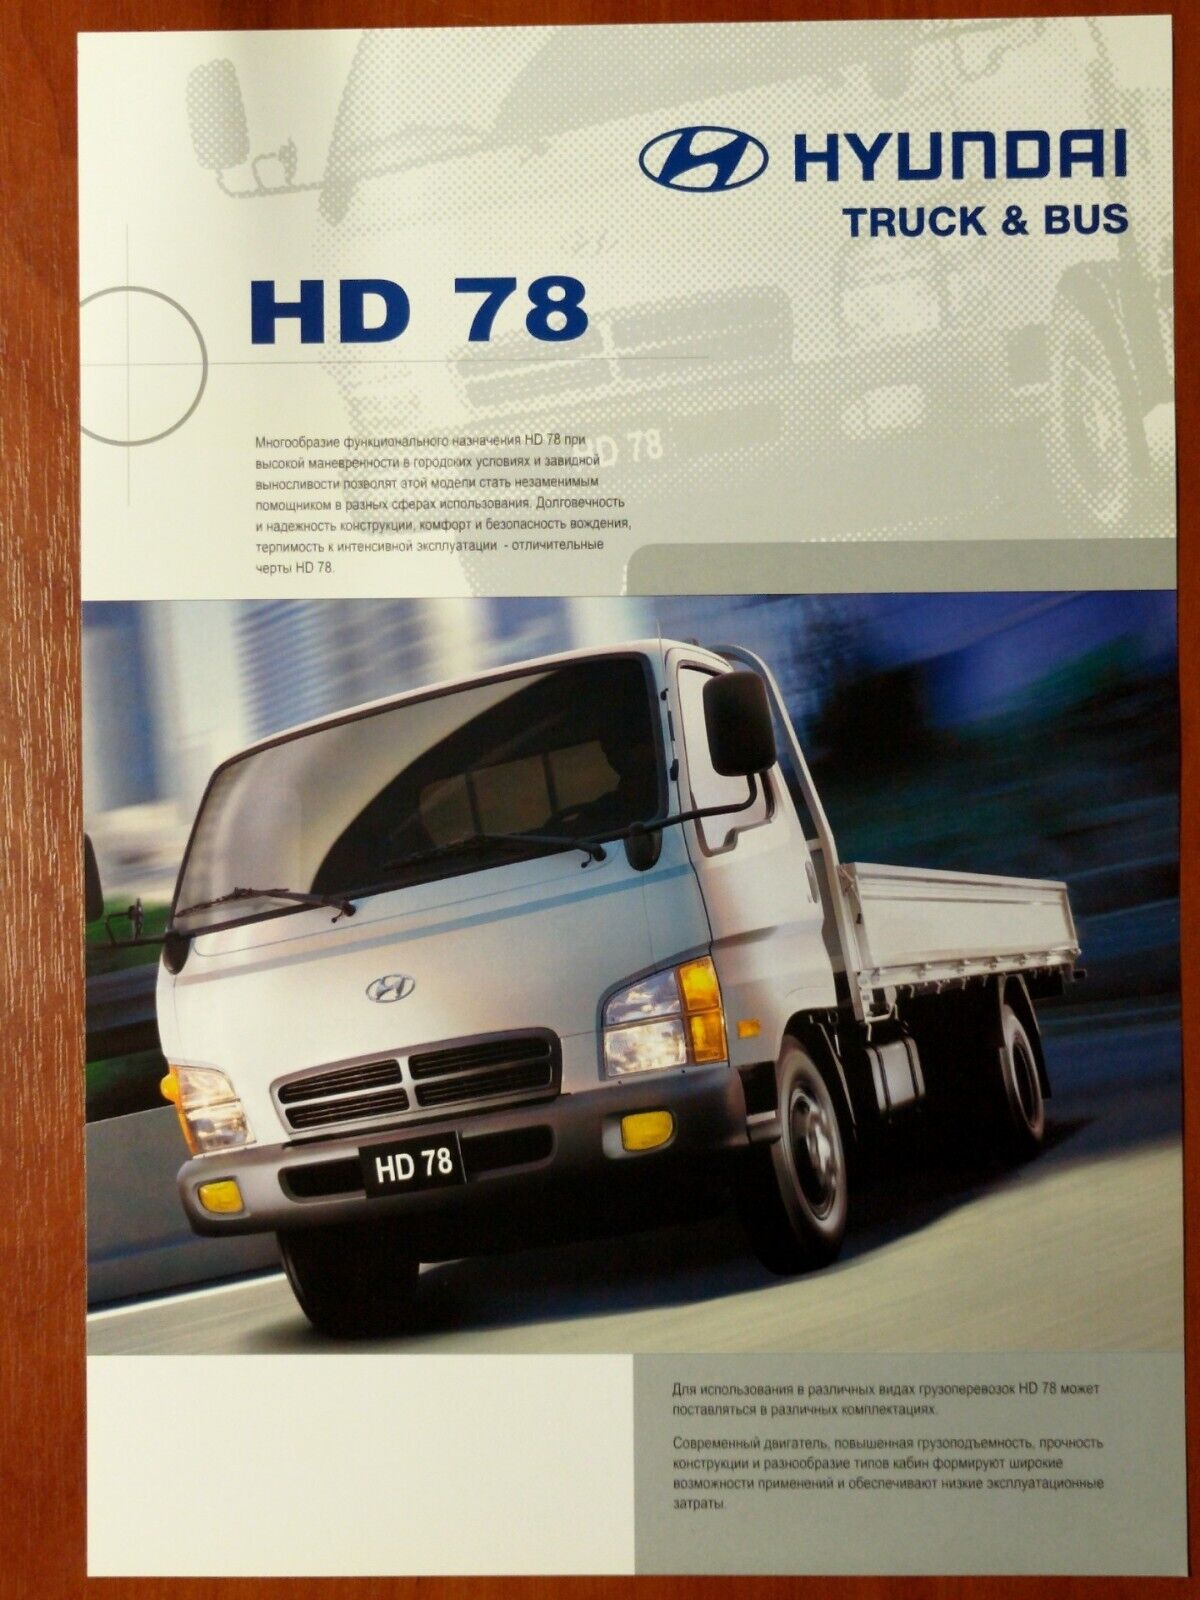 Hyundai HD78 specsheet (Russian language)